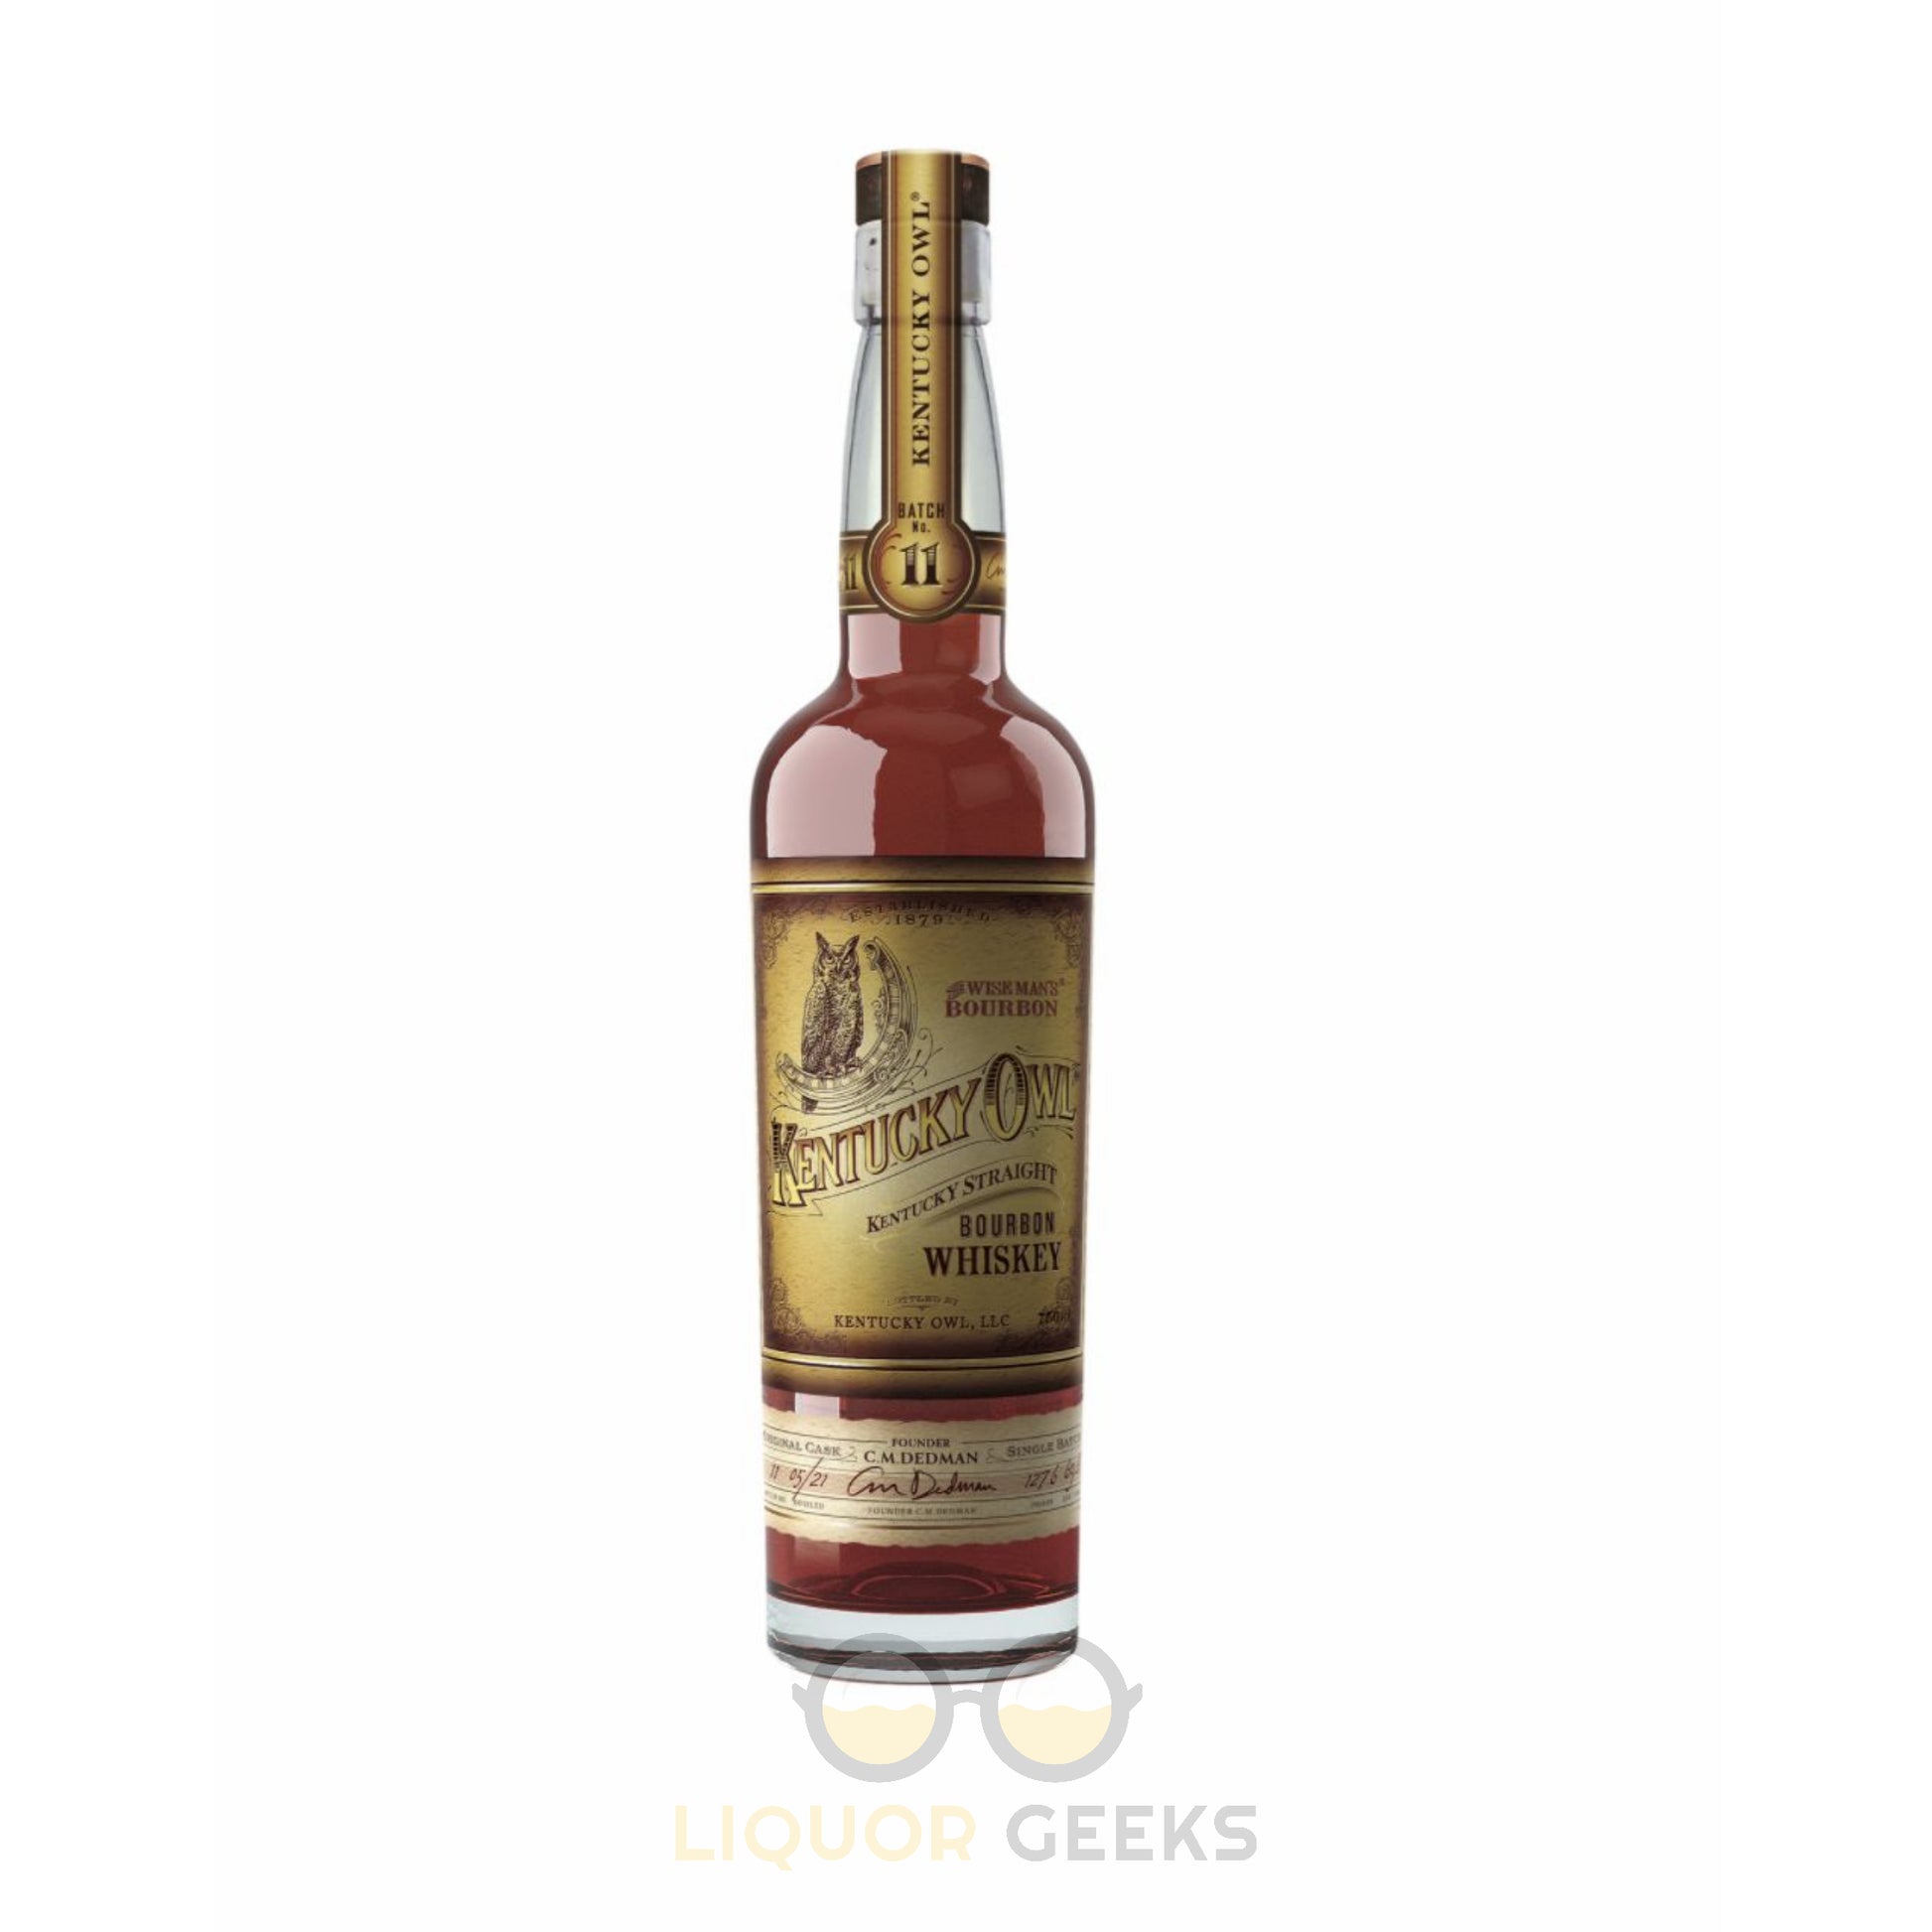 Kentucky Owl Bourbon Whiskey - L Geeks